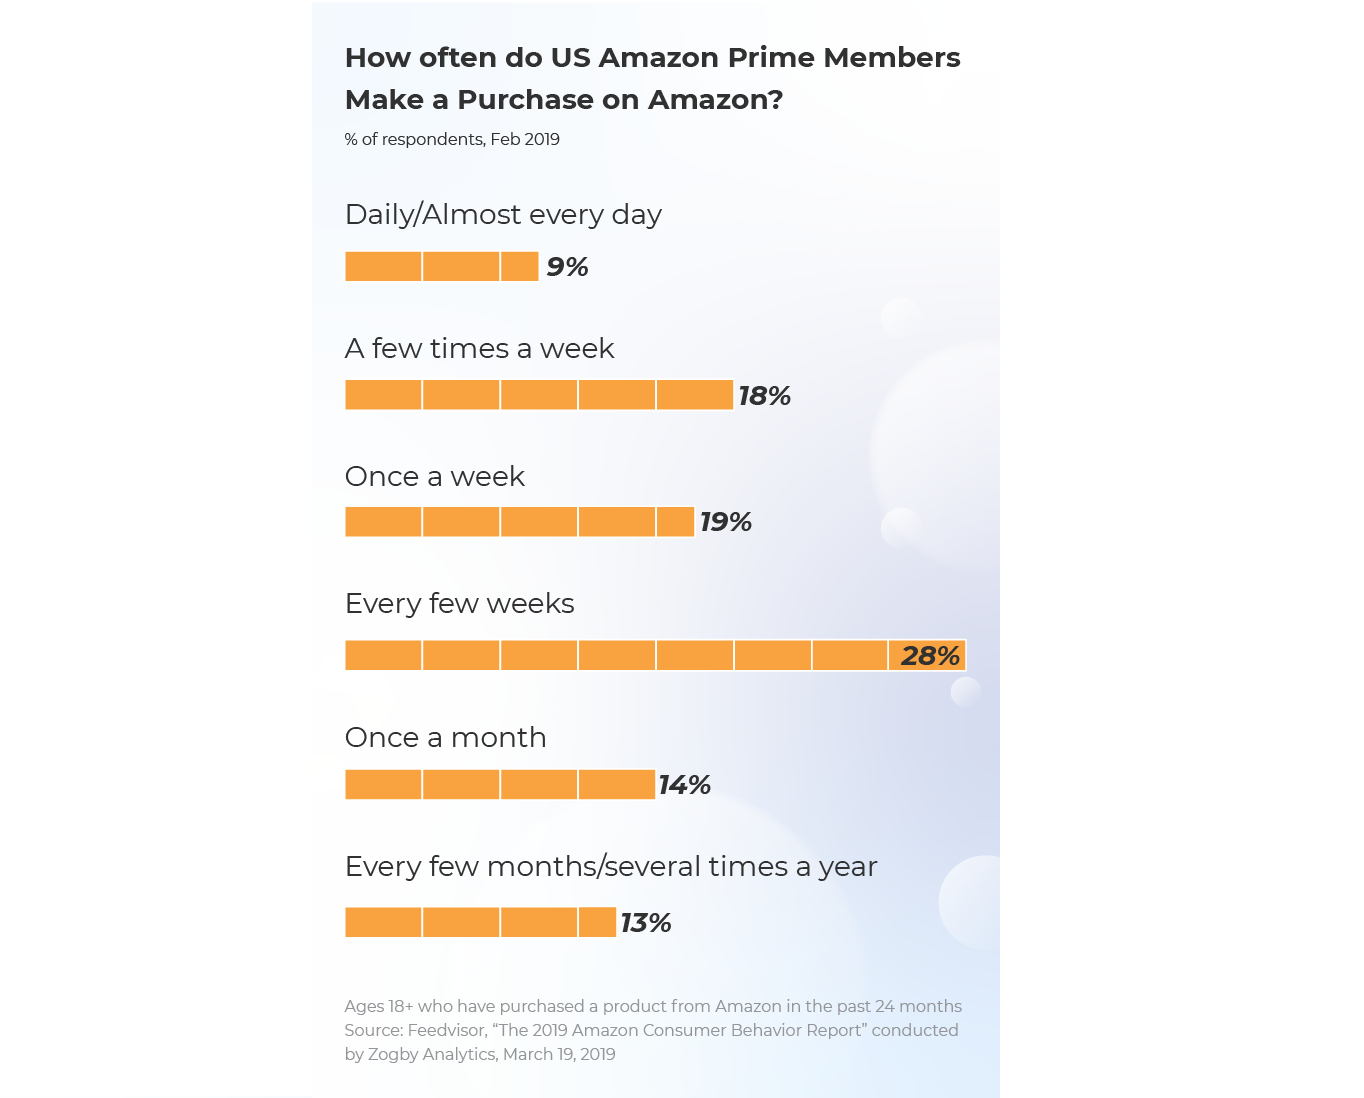 Amazon Prime members purchase statistic graph 
